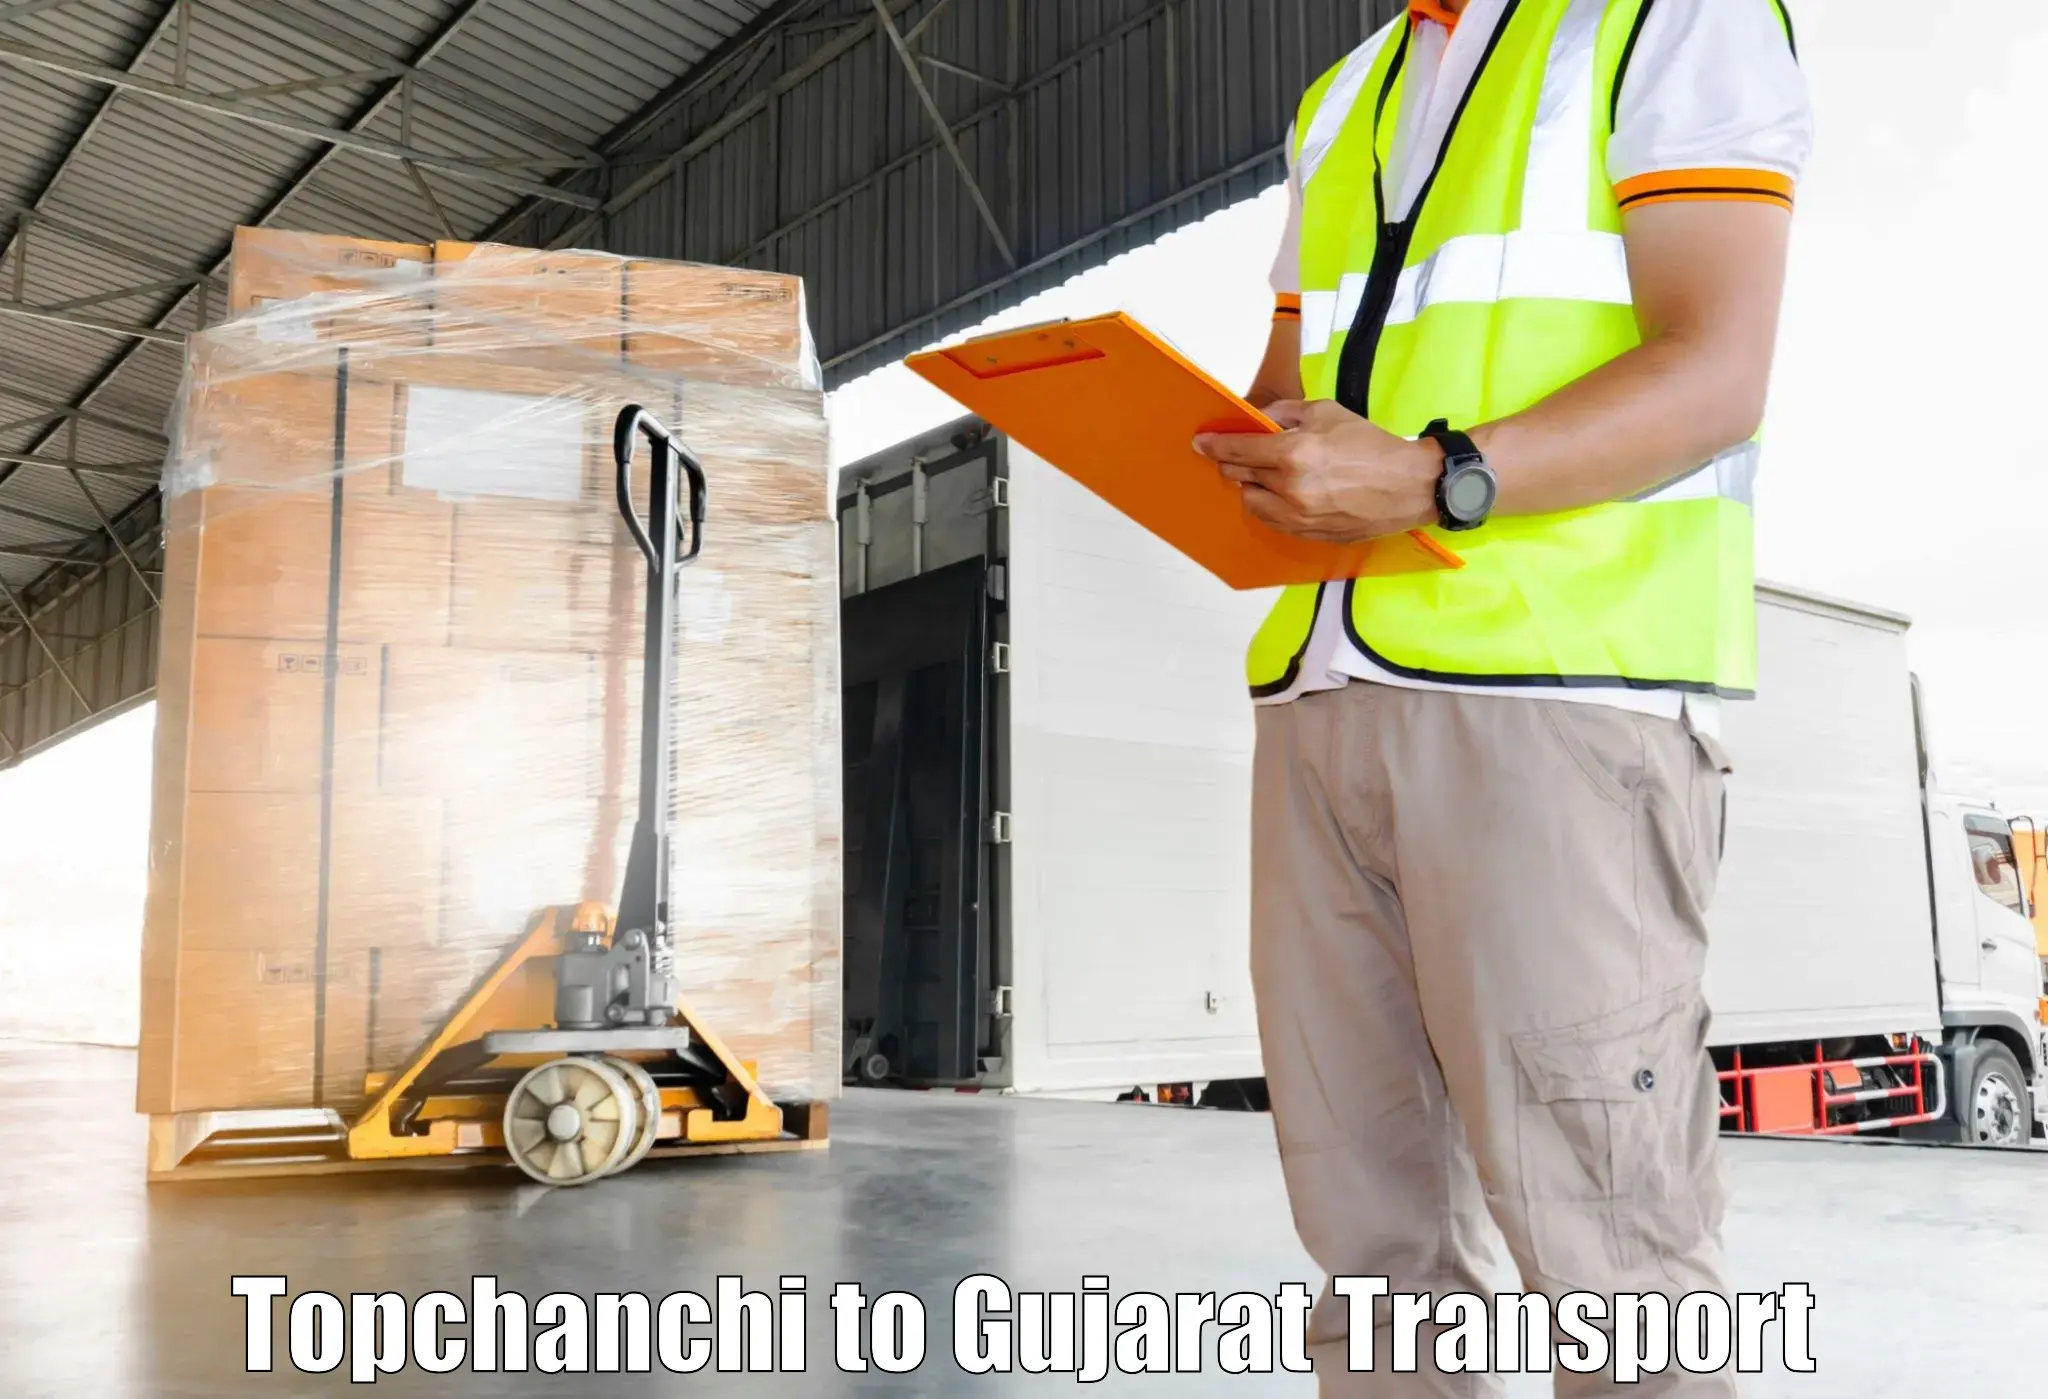 Lorry transport service Topchanchi to Vatadara